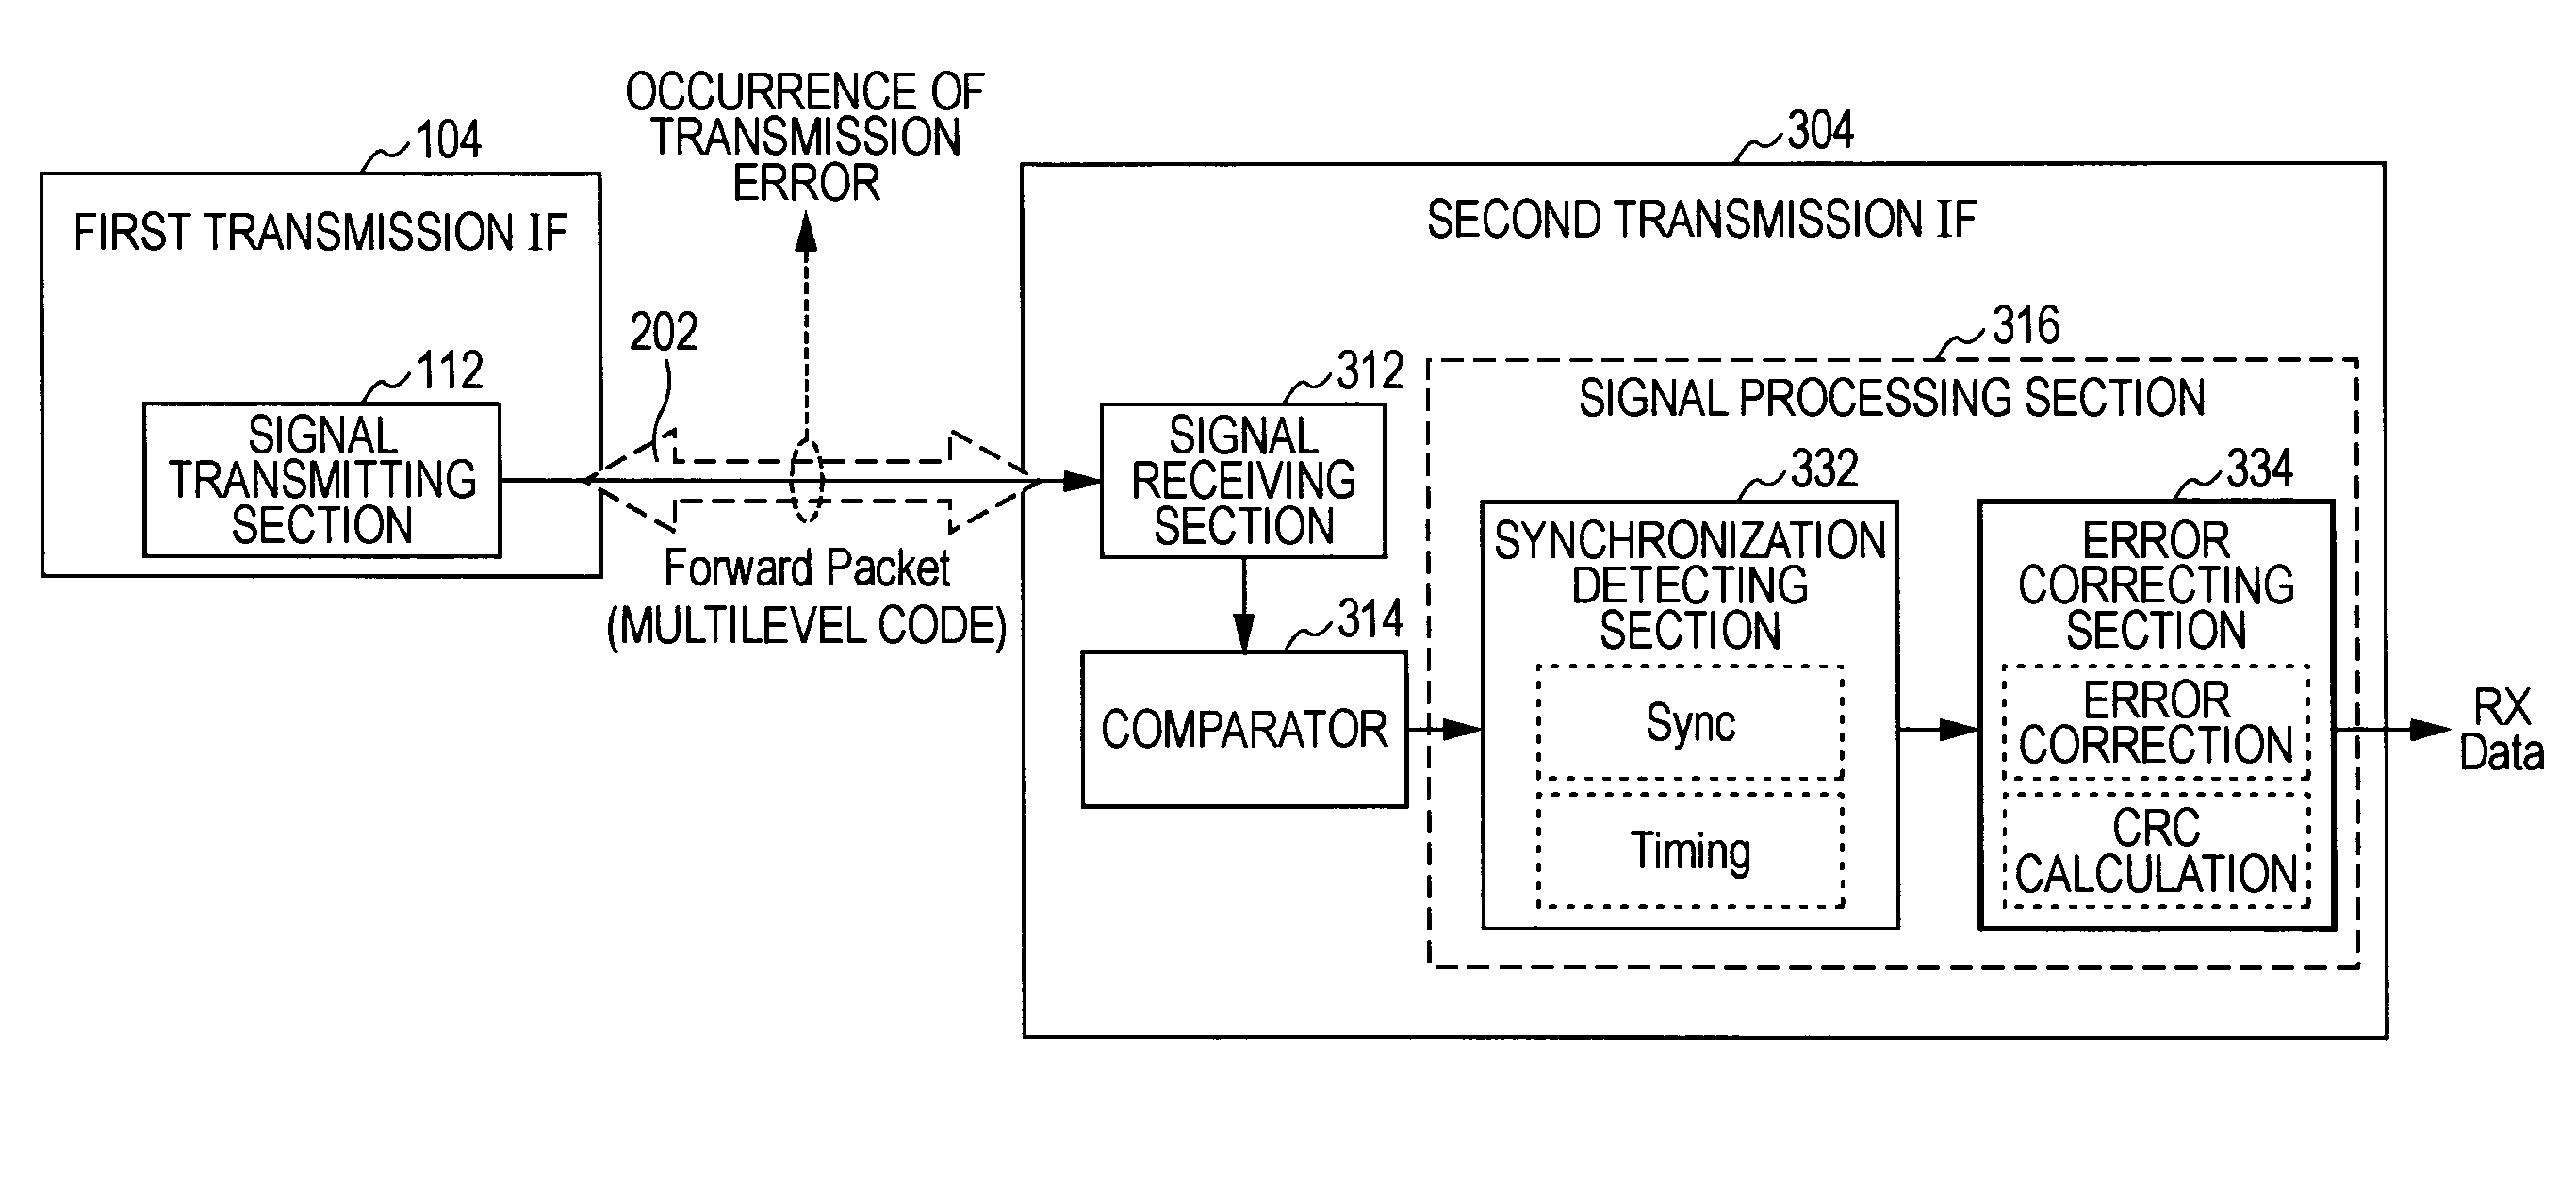 Signal processor and error correction process